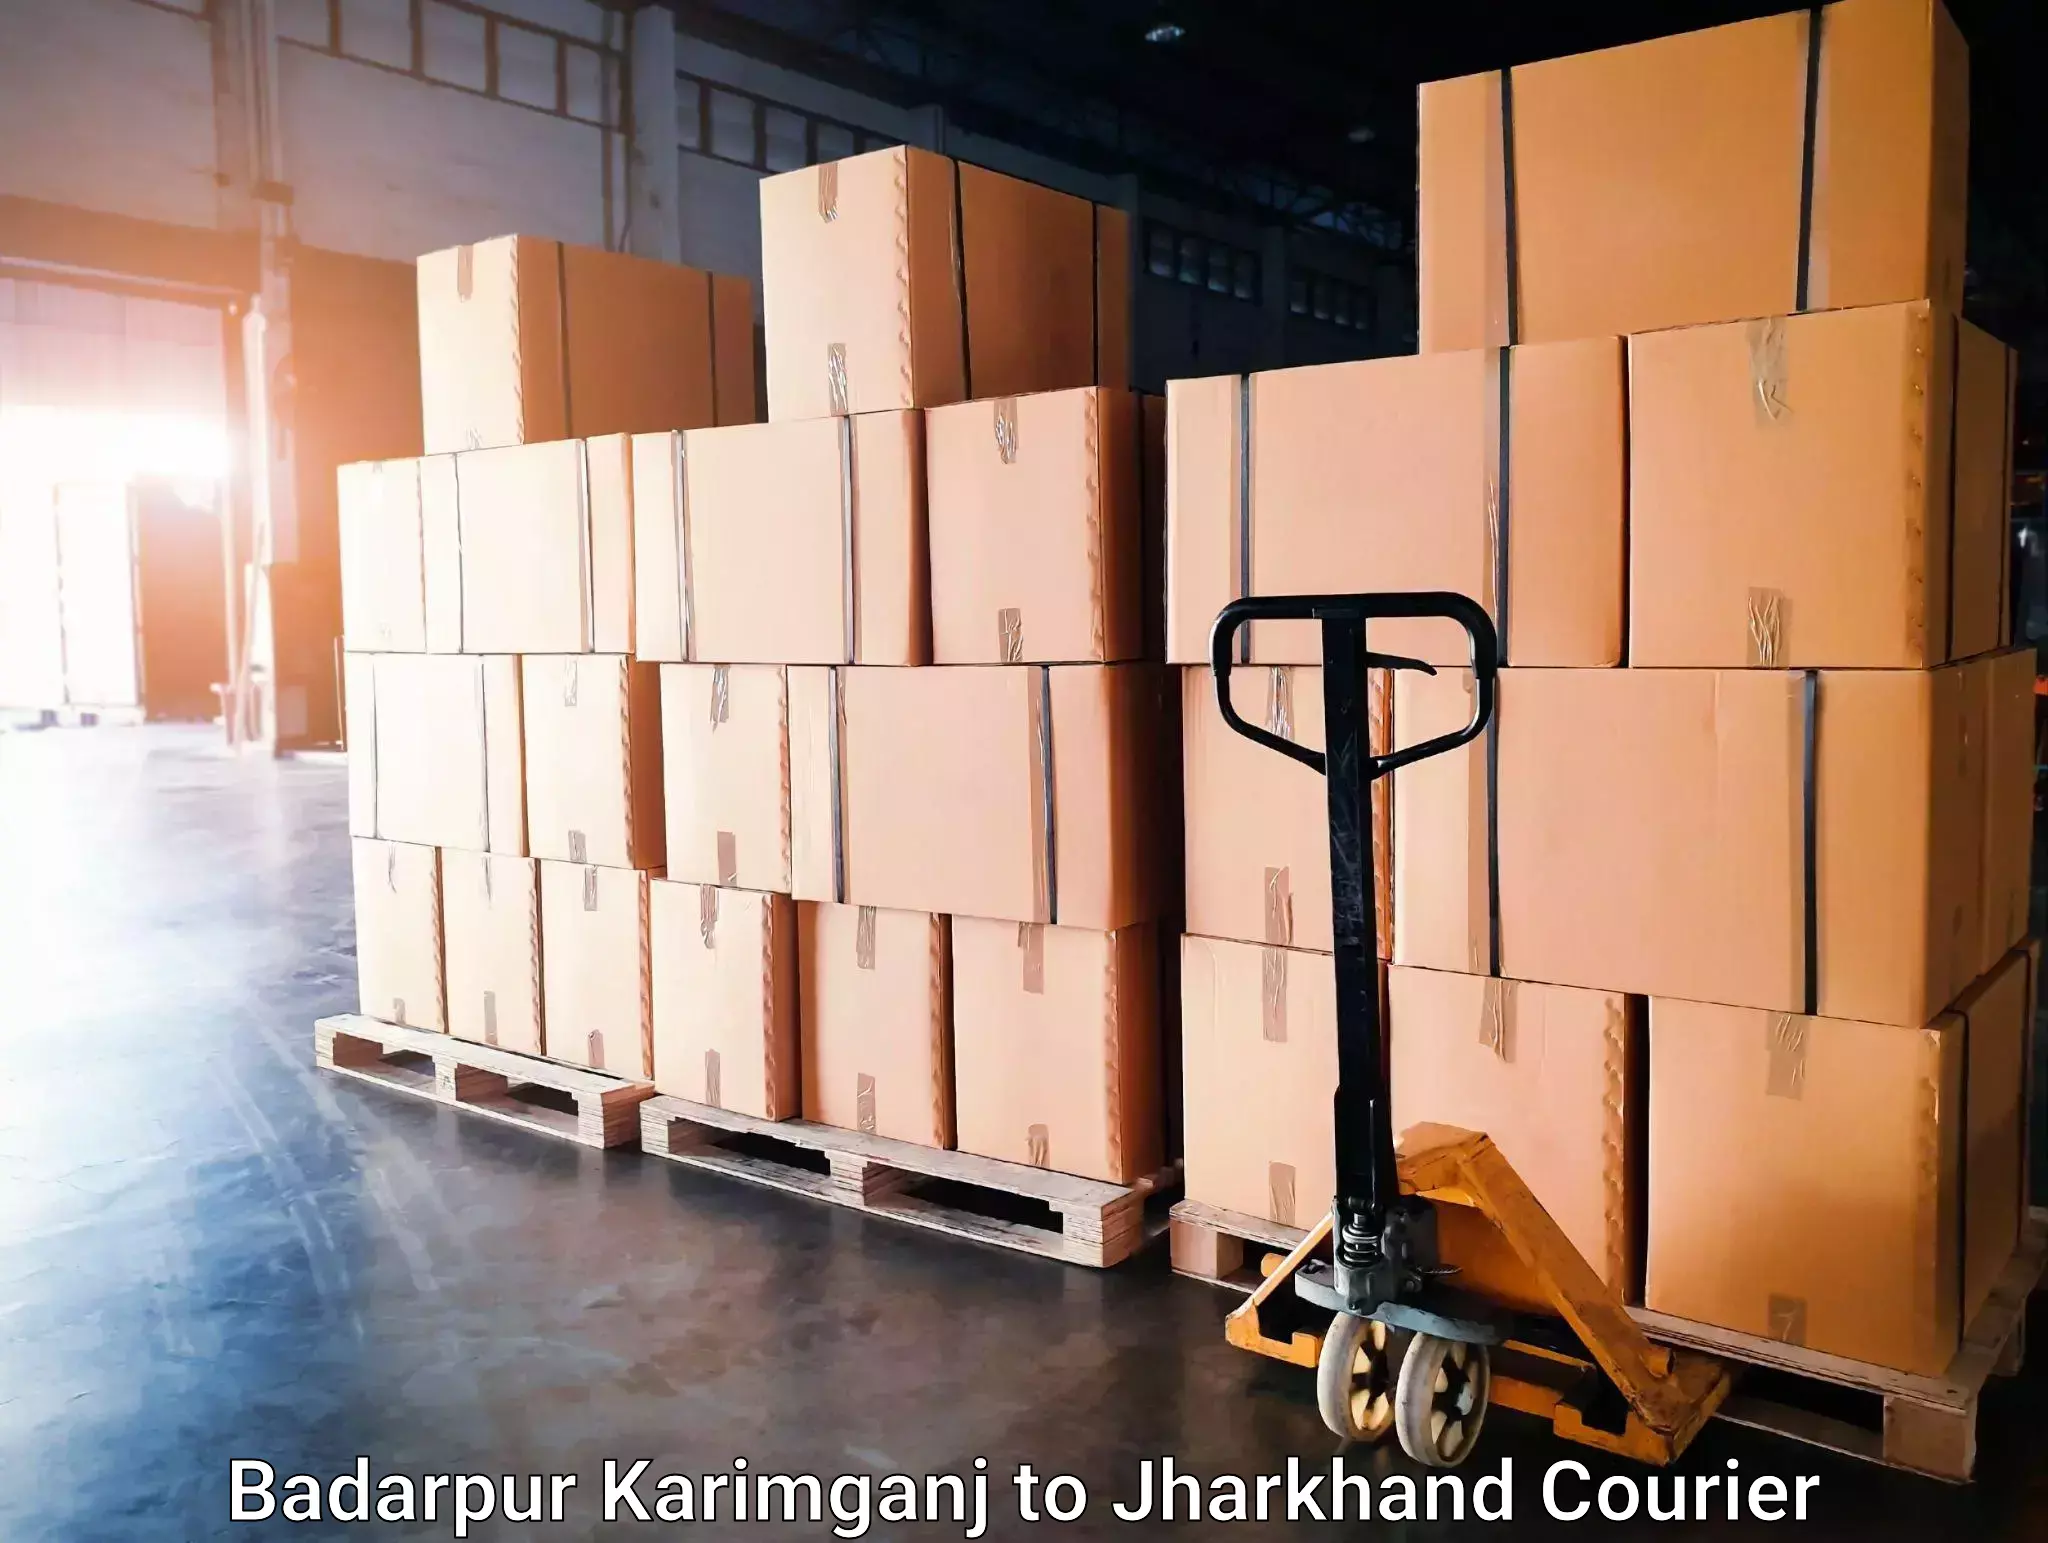 Nationwide shipping capabilities Badarpur Karimganj to Medininagar